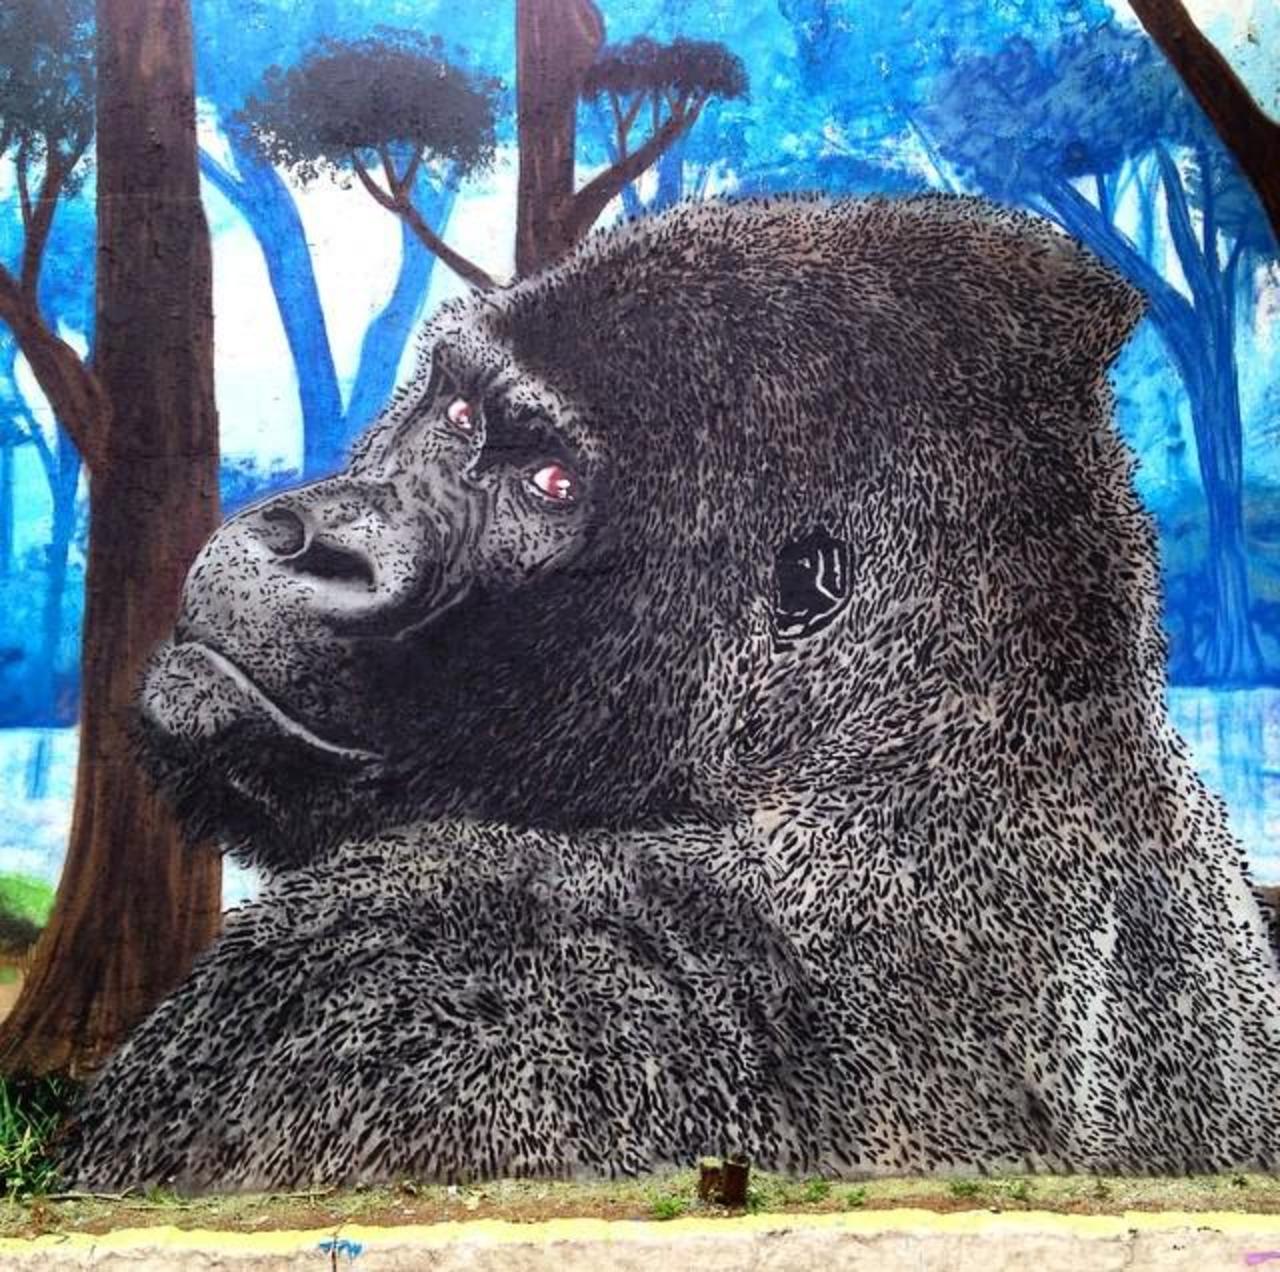 Superb Nature in Street Art piece by Thassio in São Paulo, Brazil  

#art #mural #graffiti #streetart http://t.co/bQAun78sfG